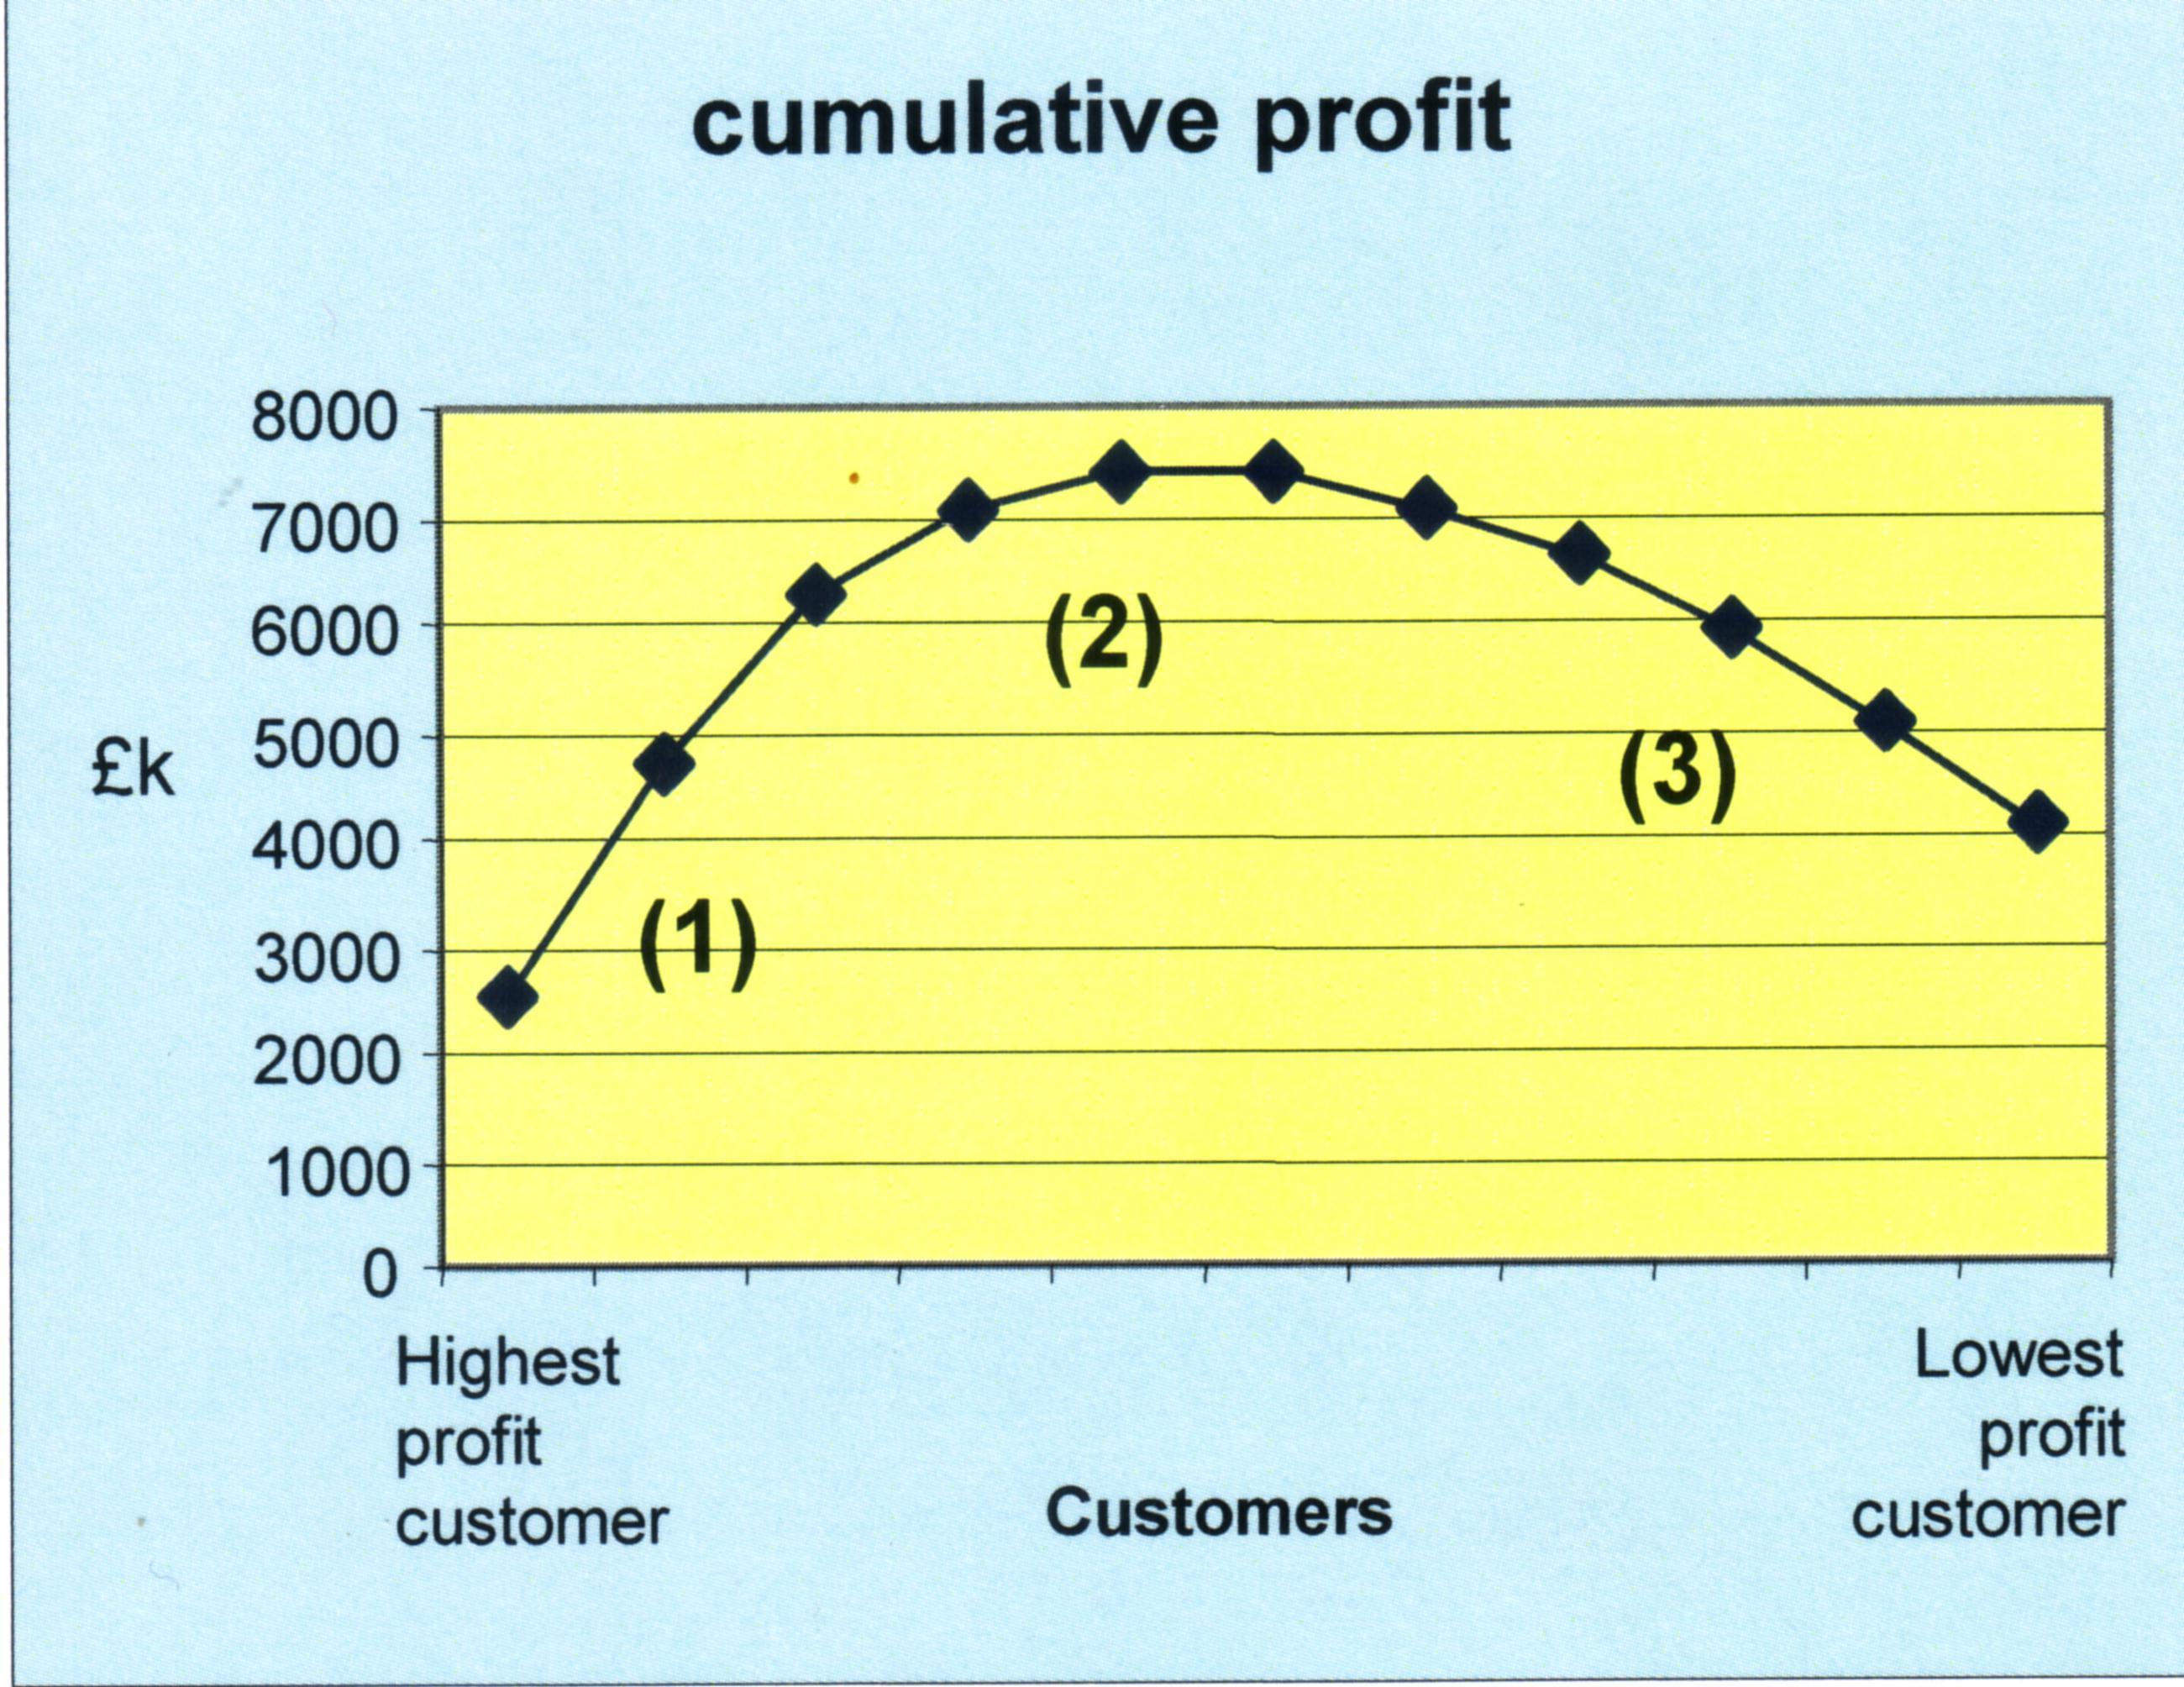 graph showing cumulative profit v. customers